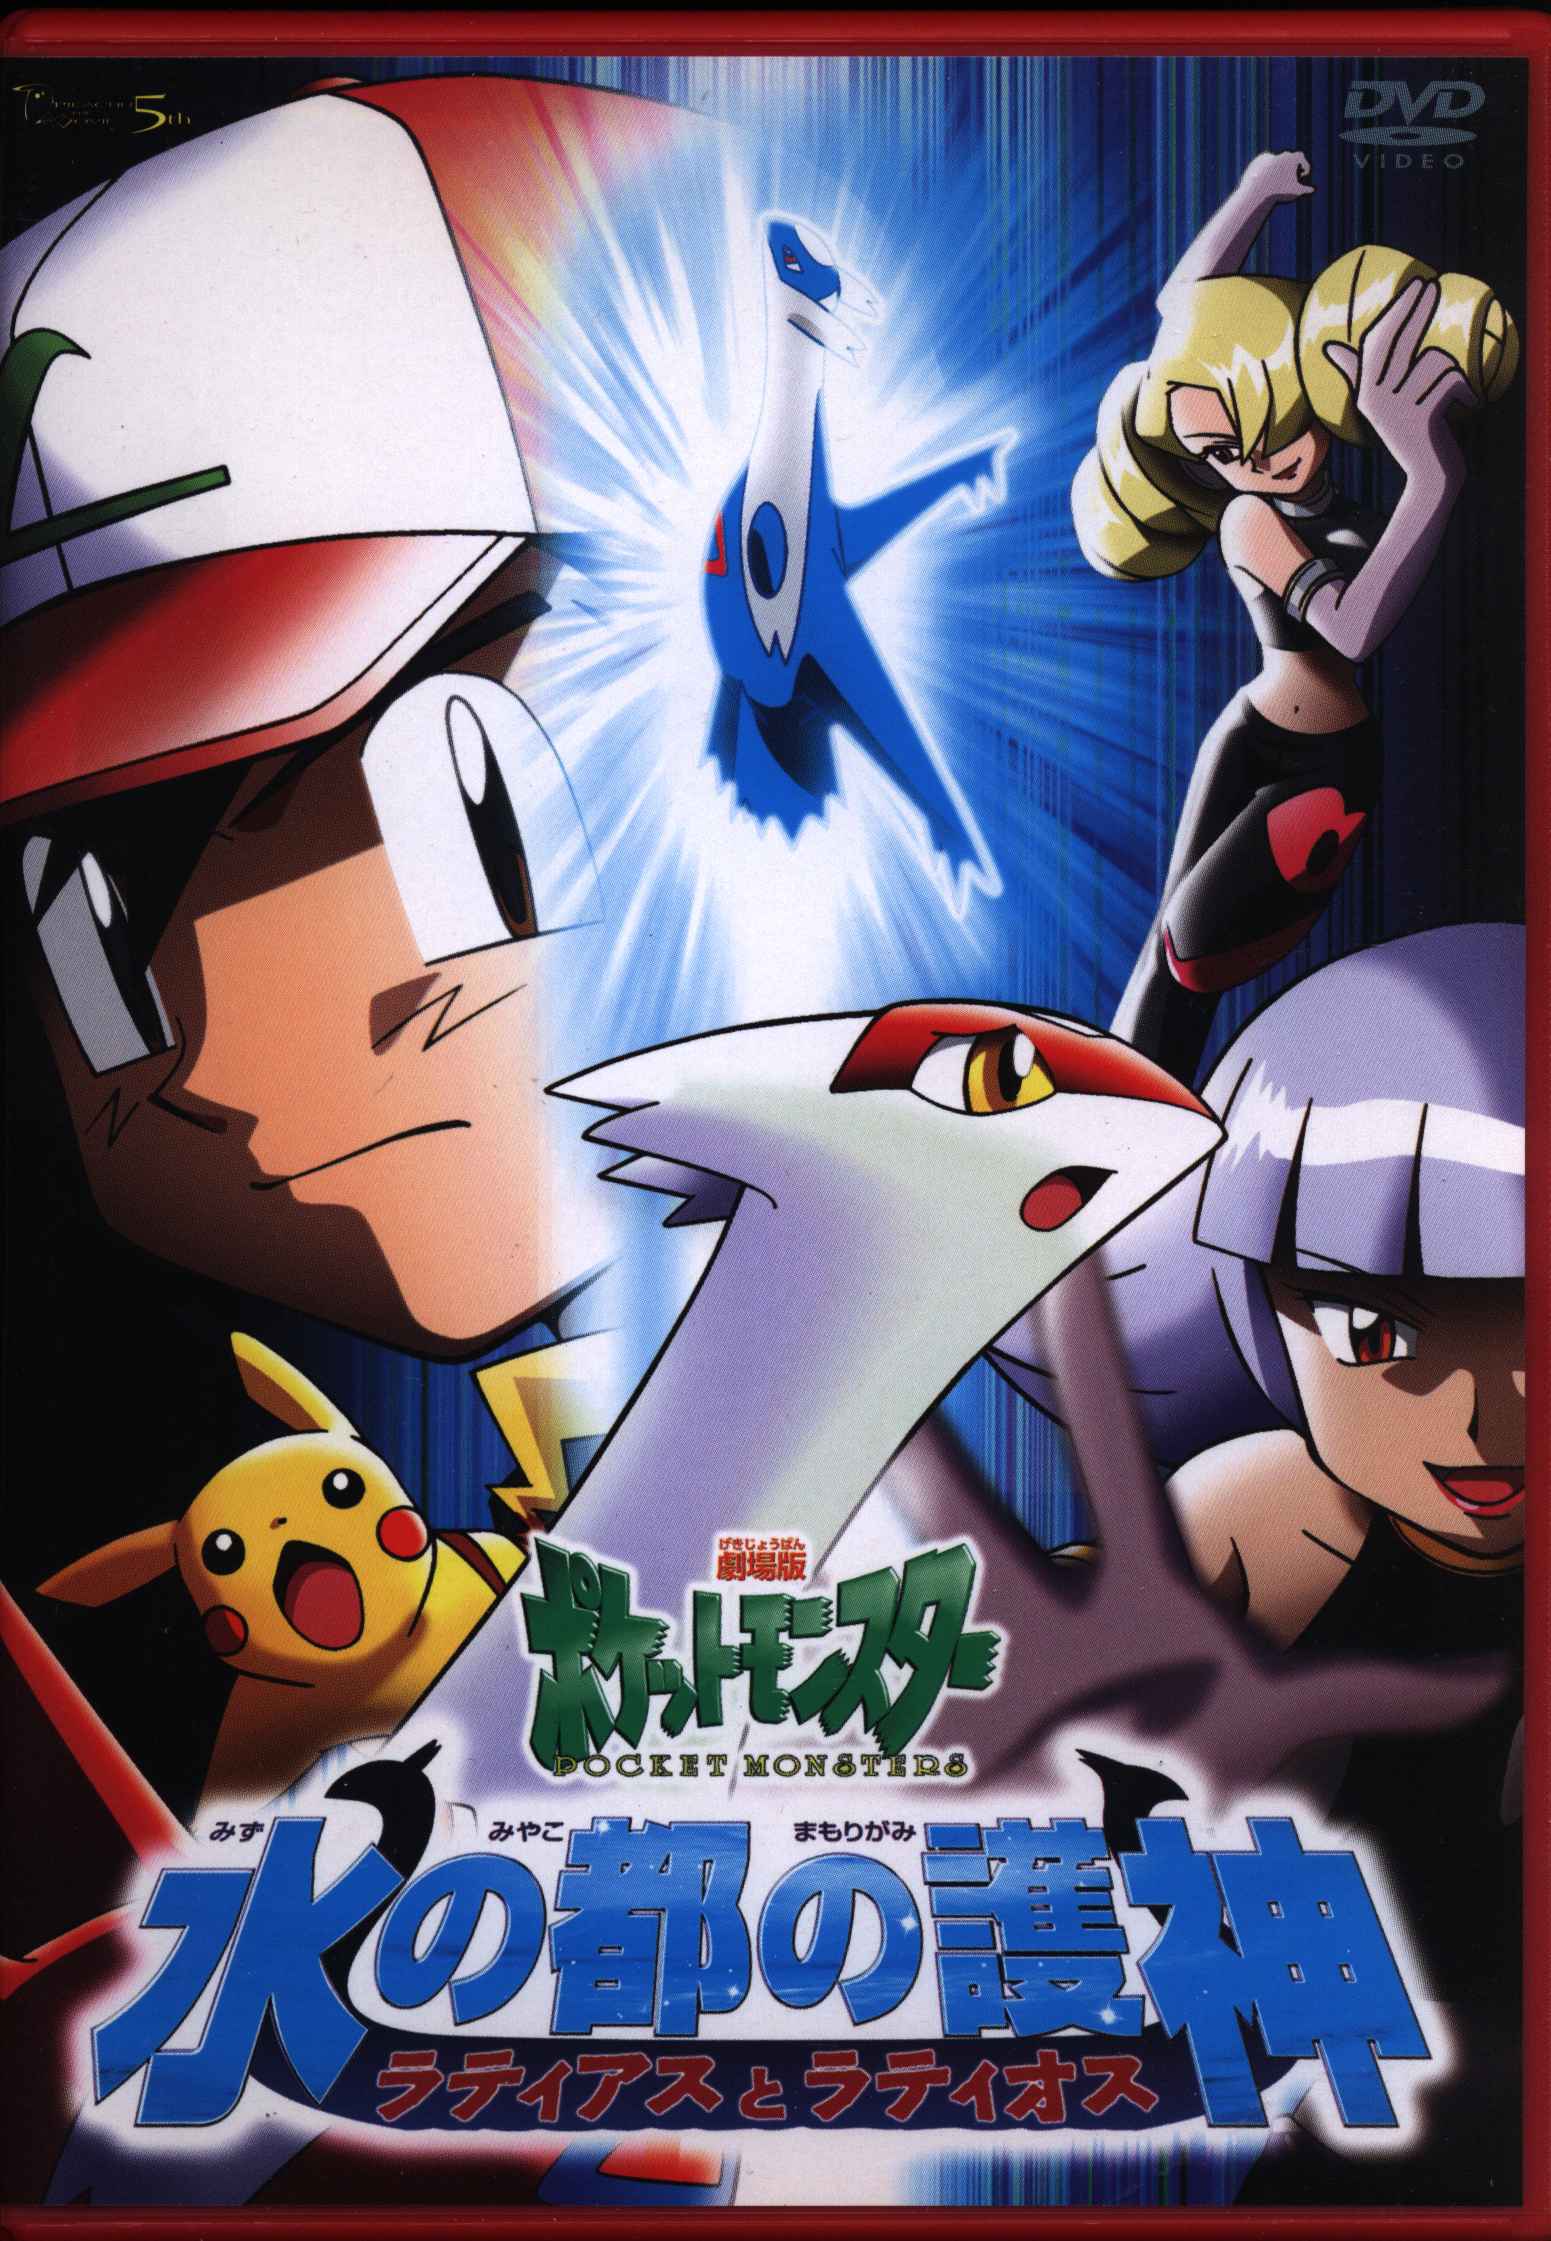 380latias Ag Anime - Legendary Pokemon Latias And Latios Transparent PNG -  874x699 - Free Download on NicePNG